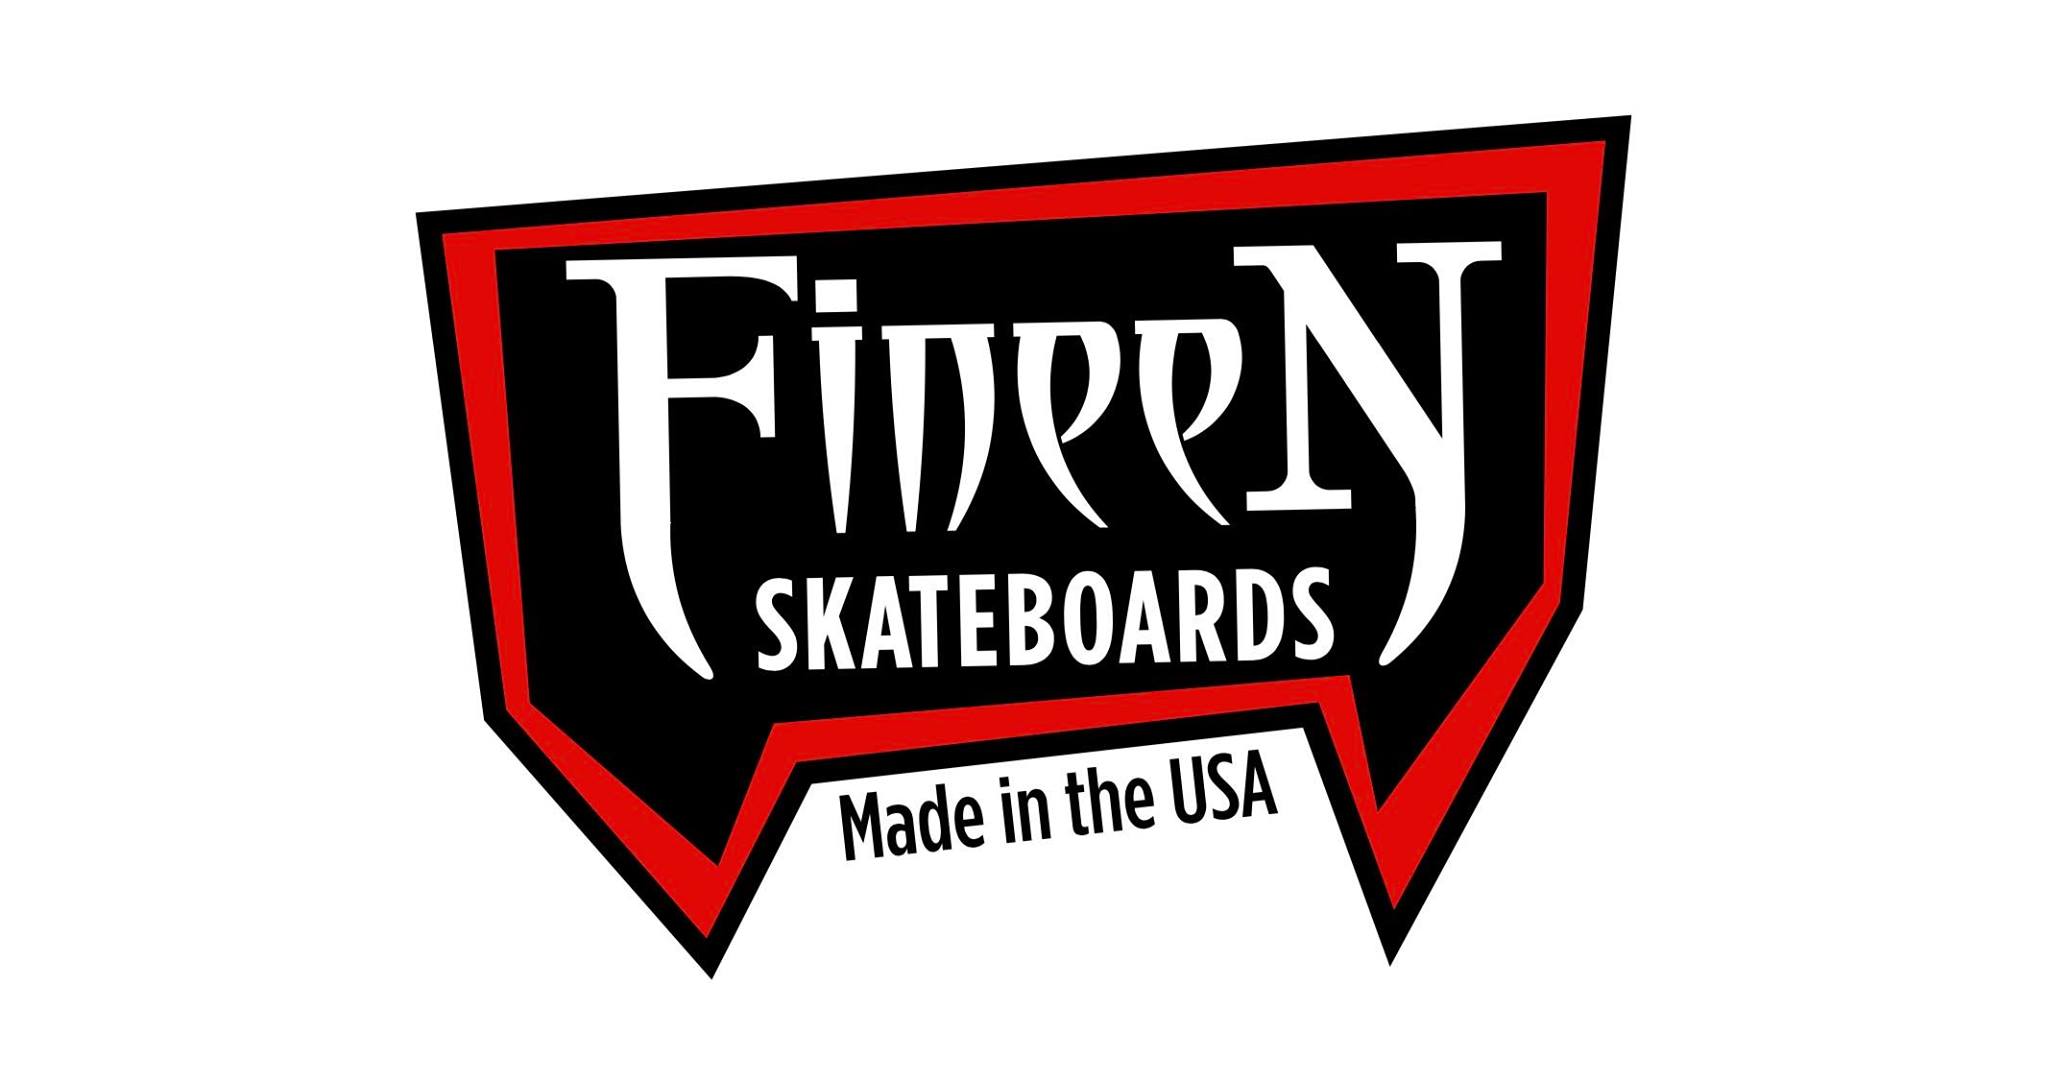 Fineen Skateboards - Made in Usa